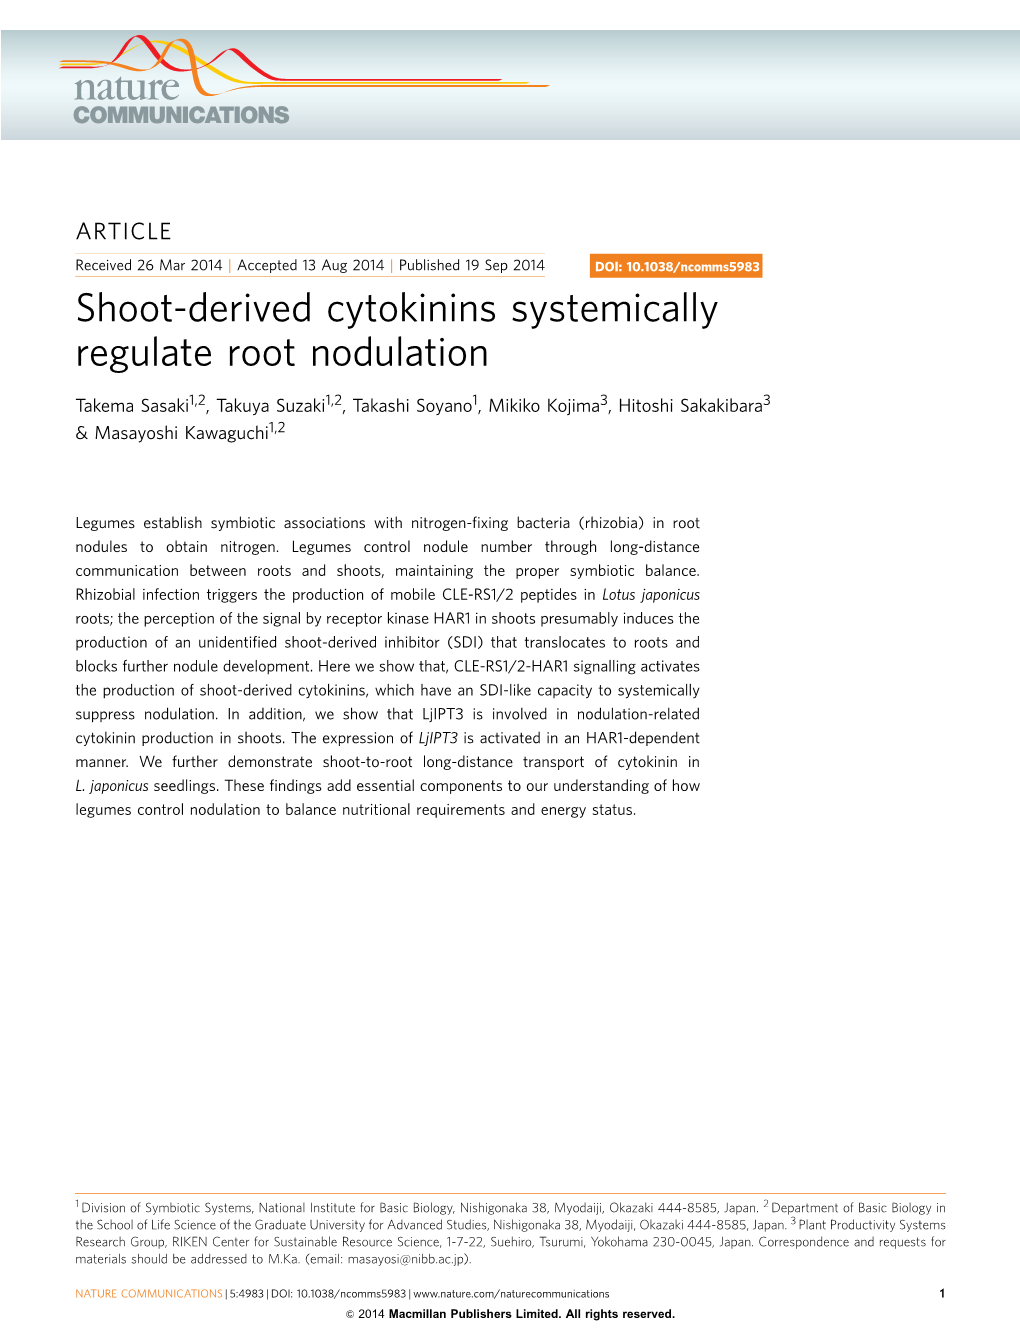 Shoot-Derived Cytokinins Systemically Regulate Root Nodulation